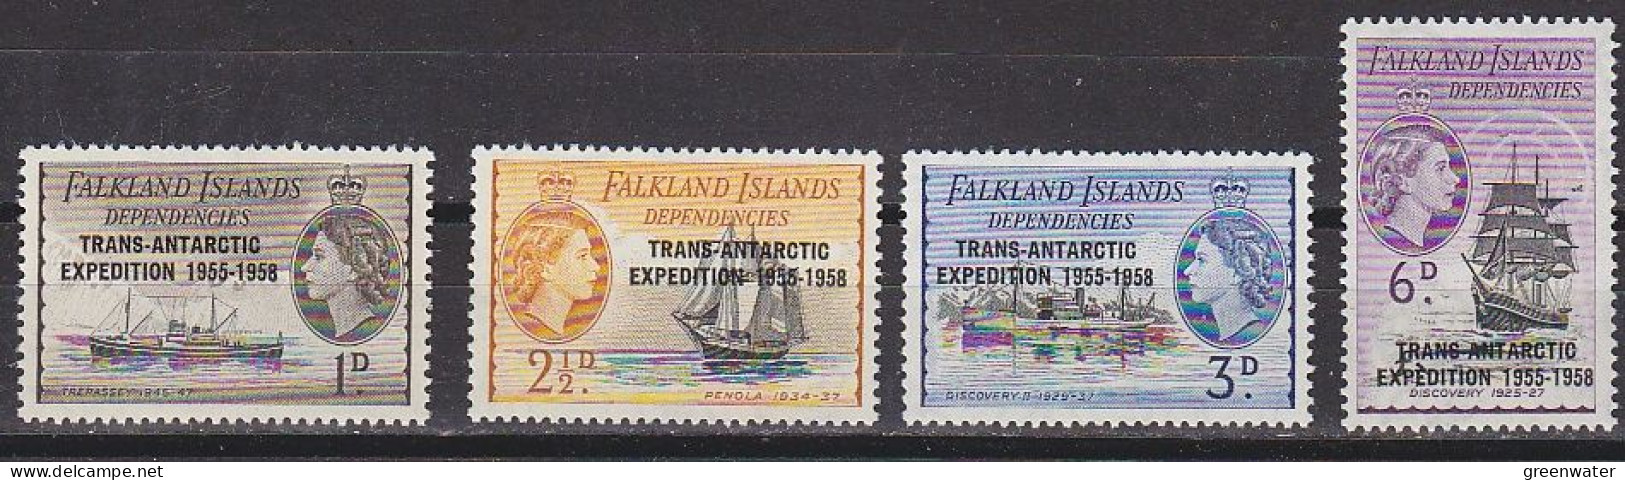 Falkland Islands Dependencies (FID) 1956 Trans Antarctic Expedition 4v ** Mnh (59861) - South Georgia